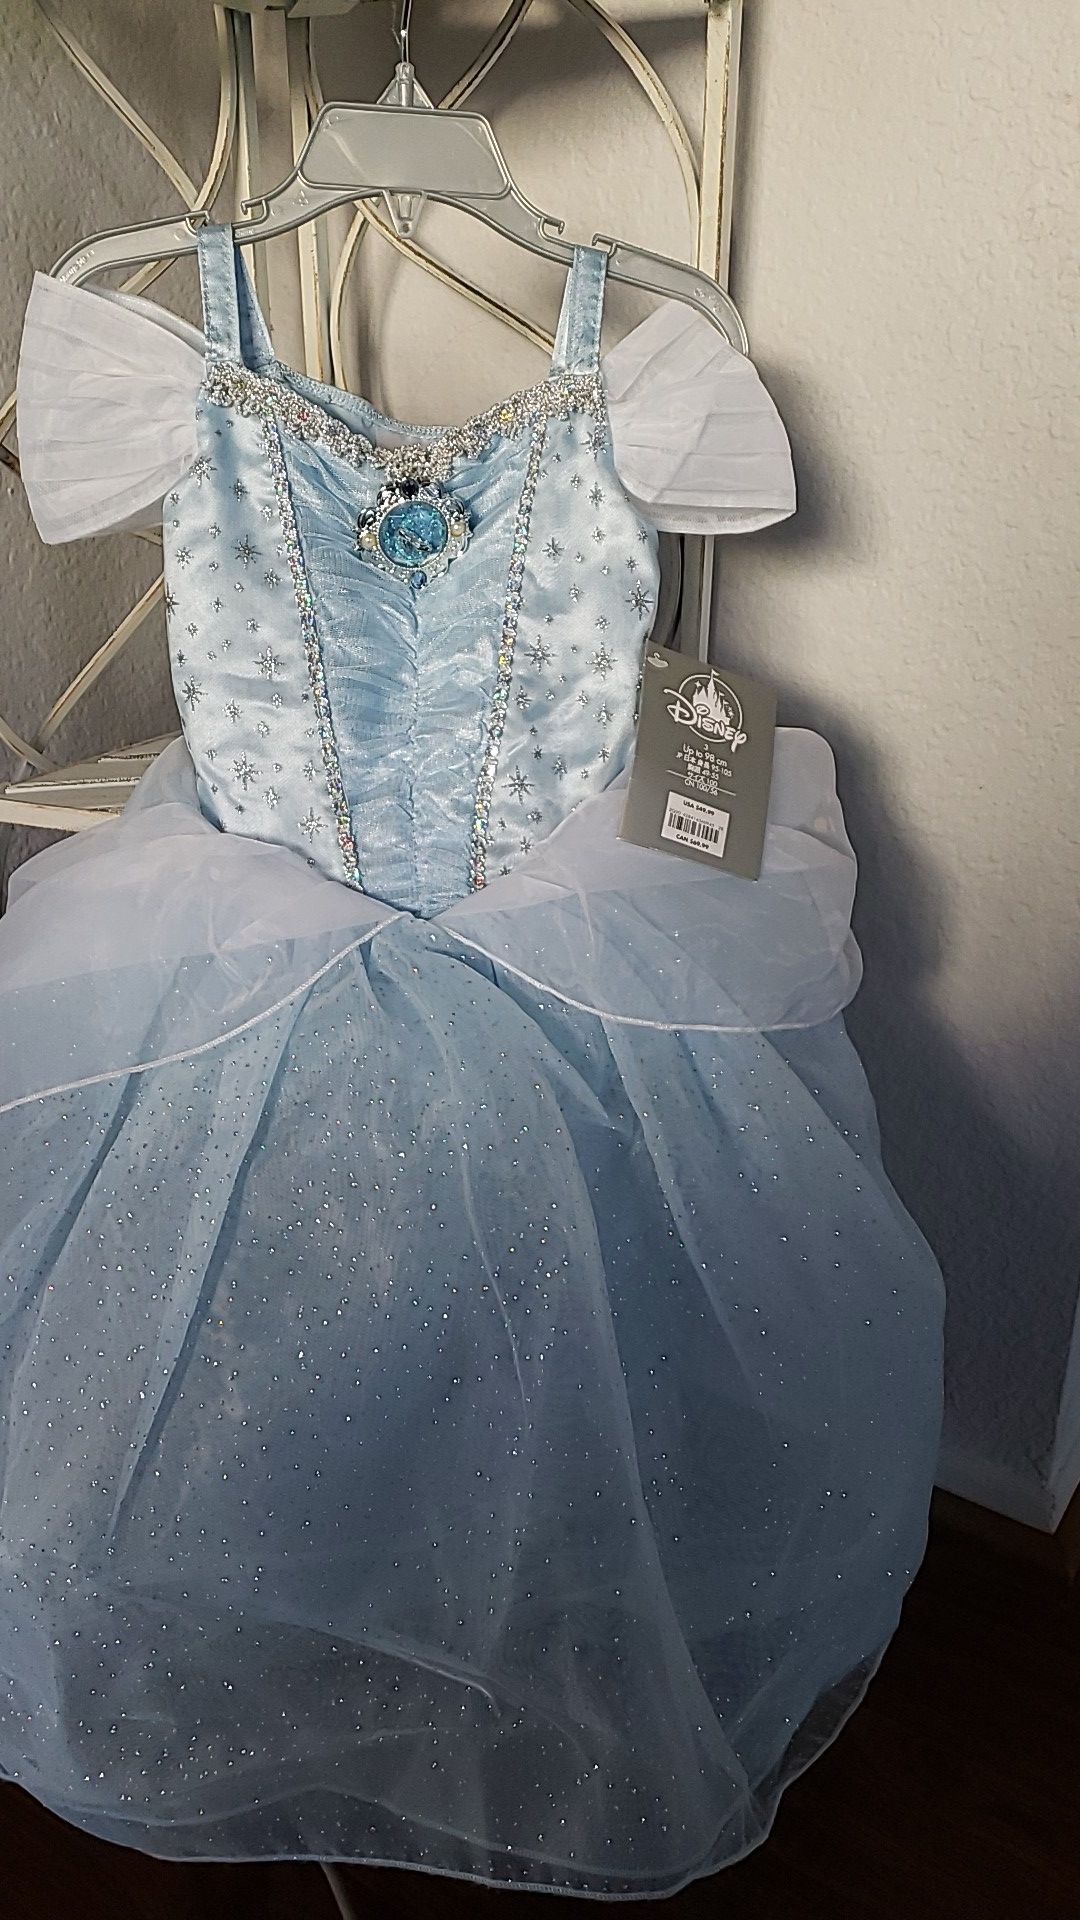 Cinderella Disney princess dress/ costume from Disney store